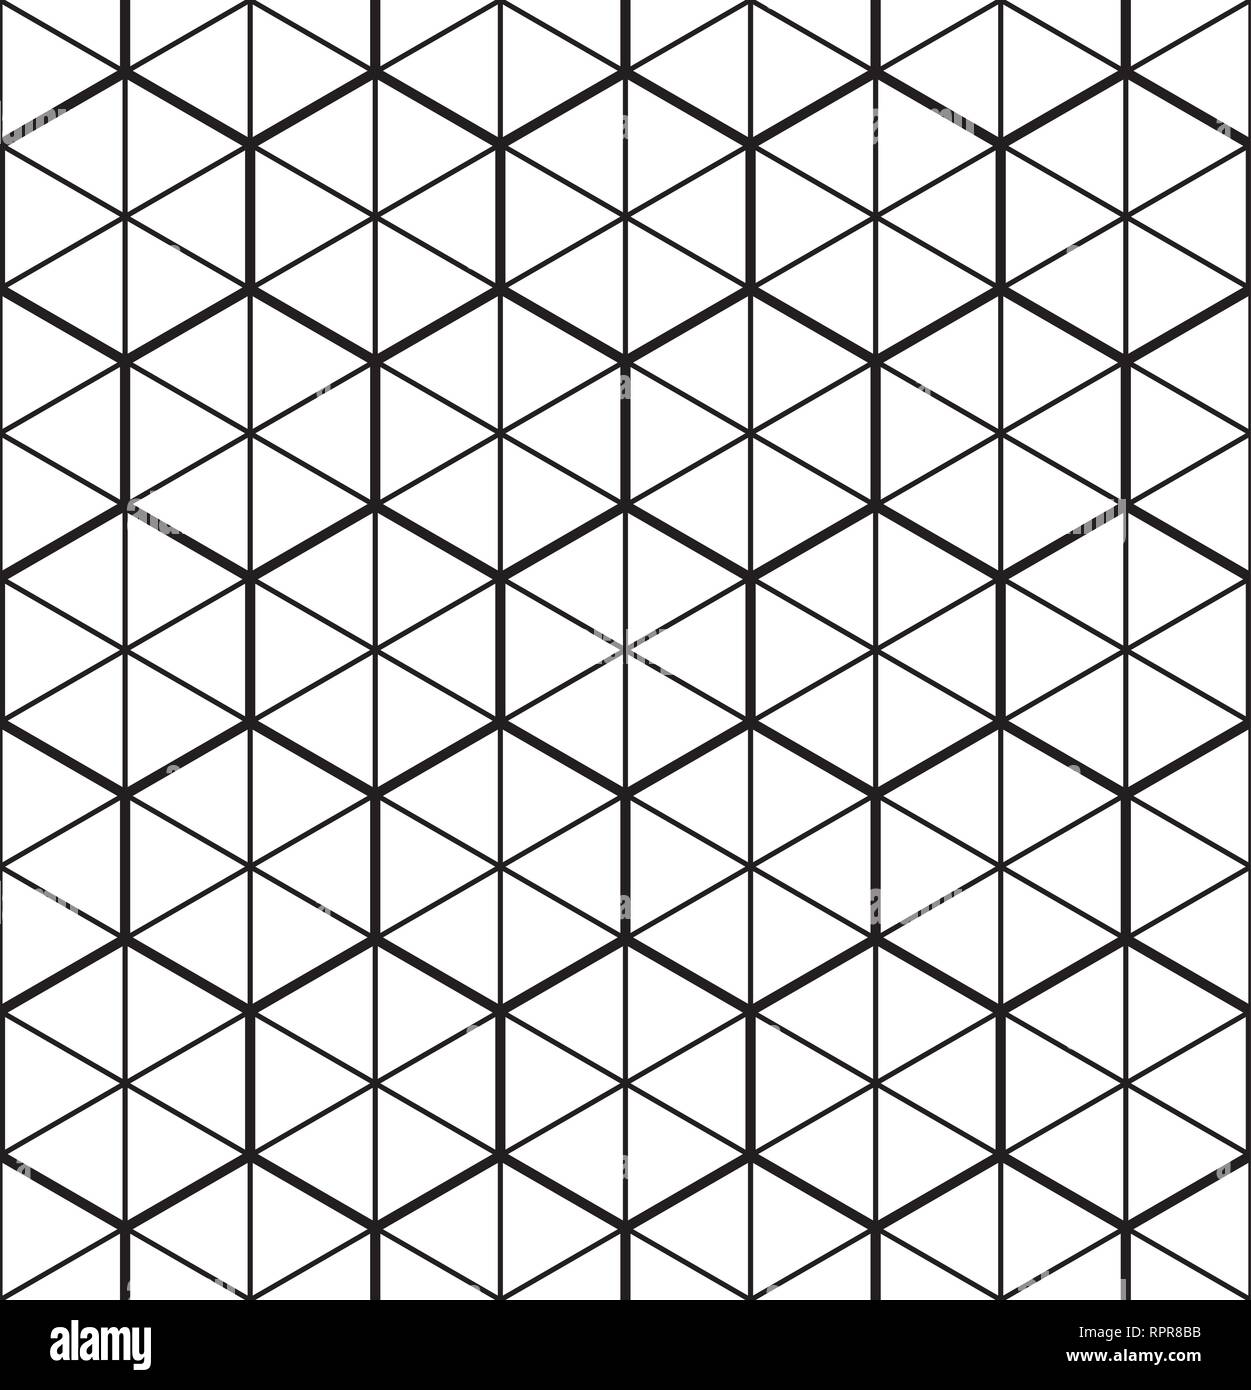 Japanese seamless geometric pattern .Black and white silhouette